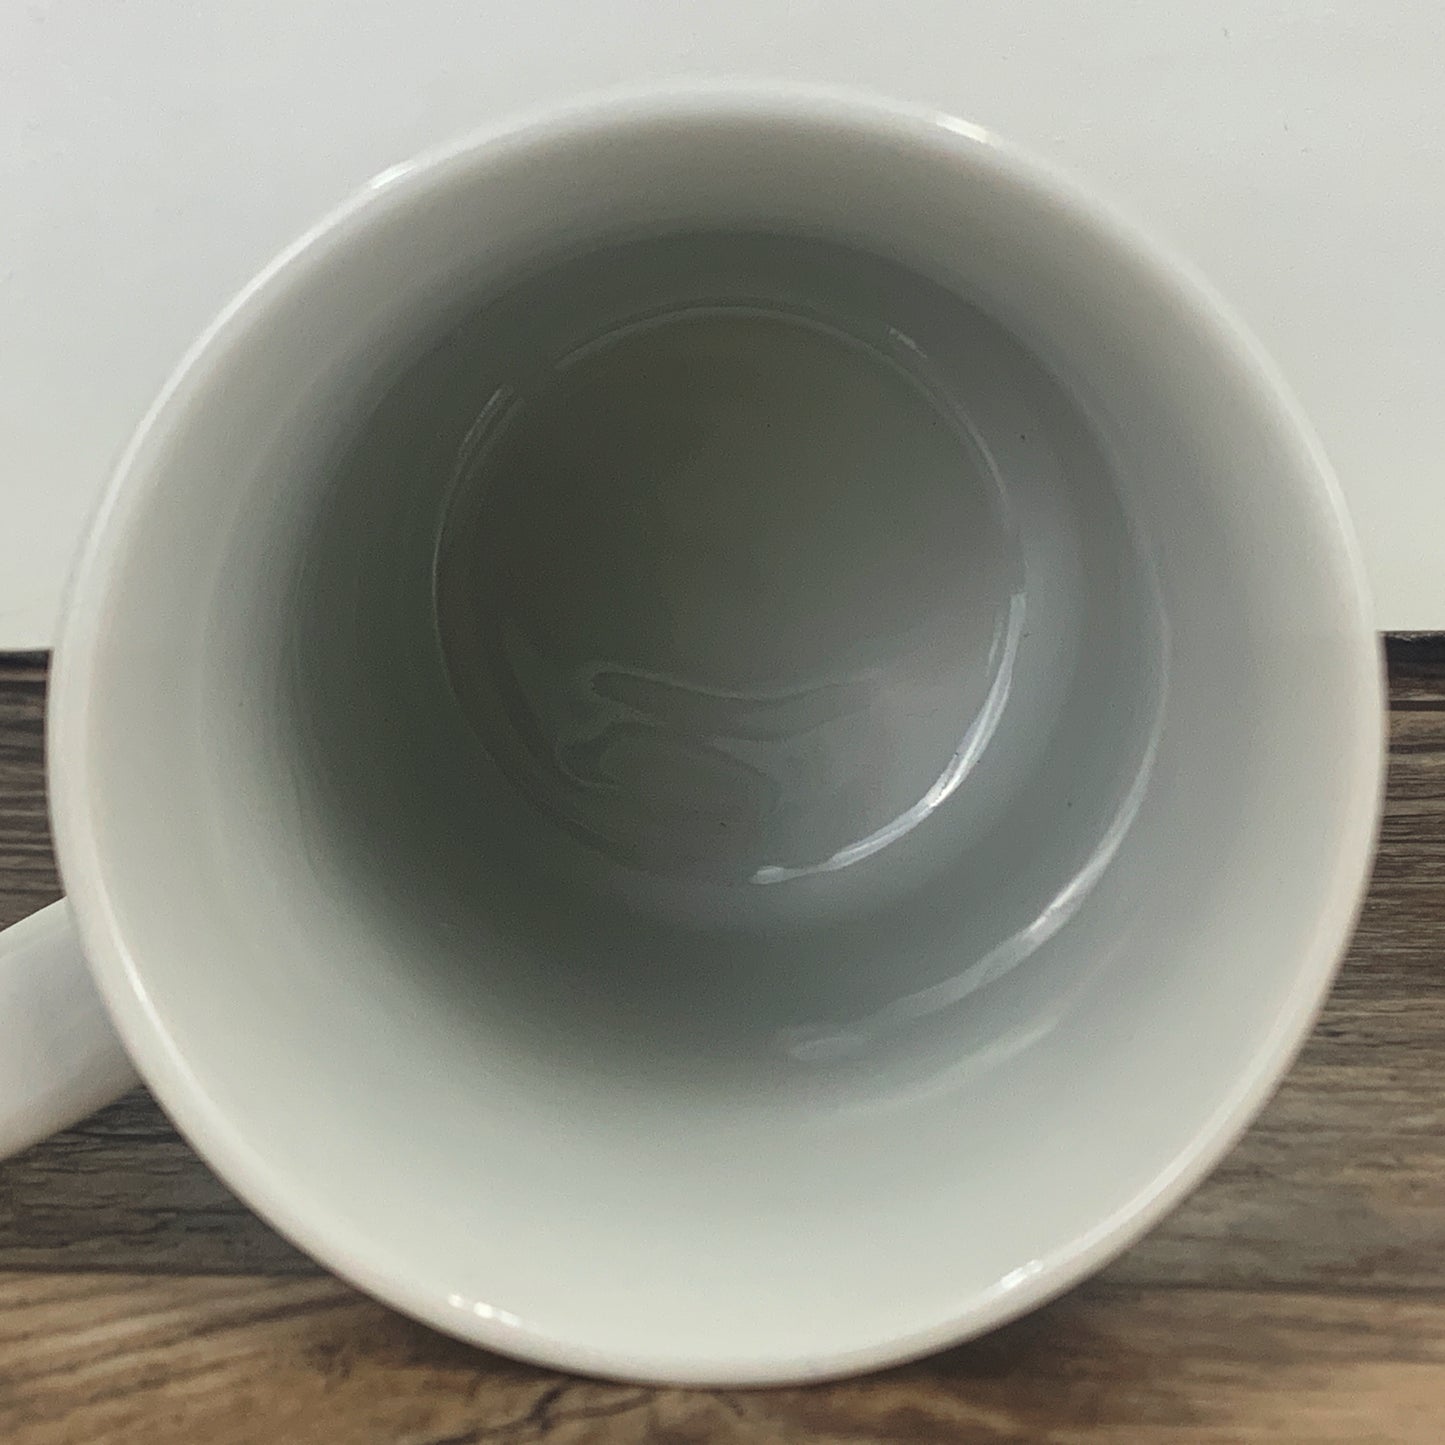 Vintage Enesco Japan Coffee Mug Kinka "Wishing you joy, happiness and a lifetime of love"